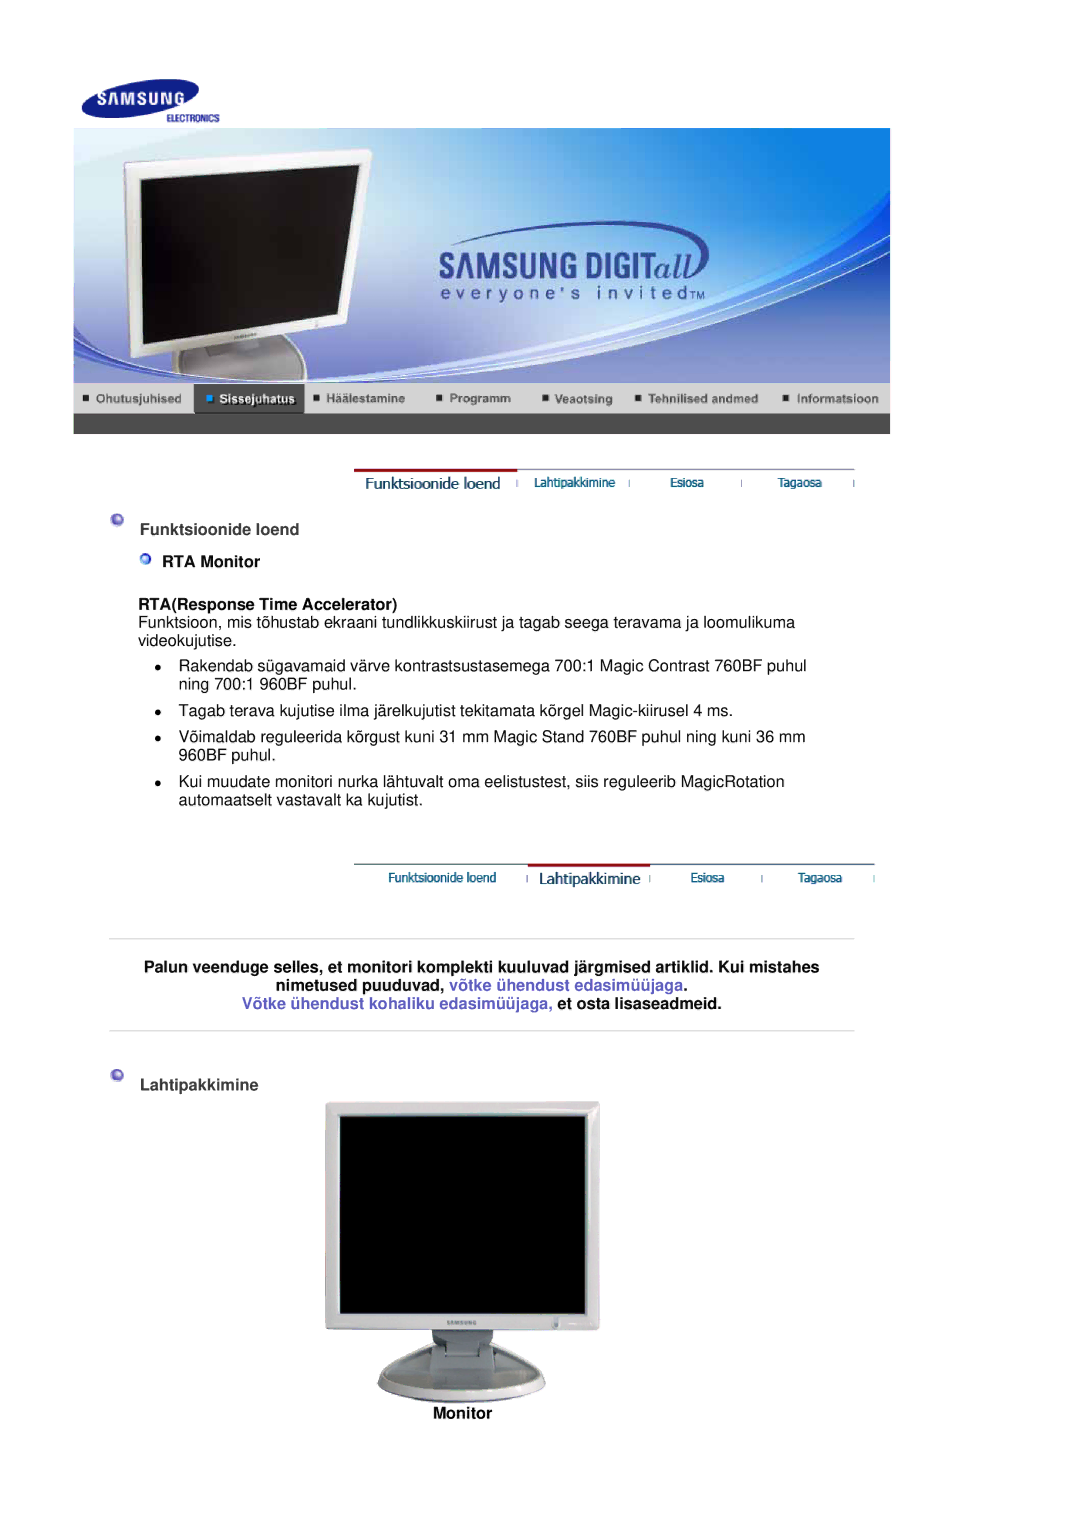 Samsung LS19HJDQHV/EDC, LS19HJDQFV/EDC manual Funktsioonide loend, RTA Monitor RTAResponse Time Accelerator, Lahtipakkimine 